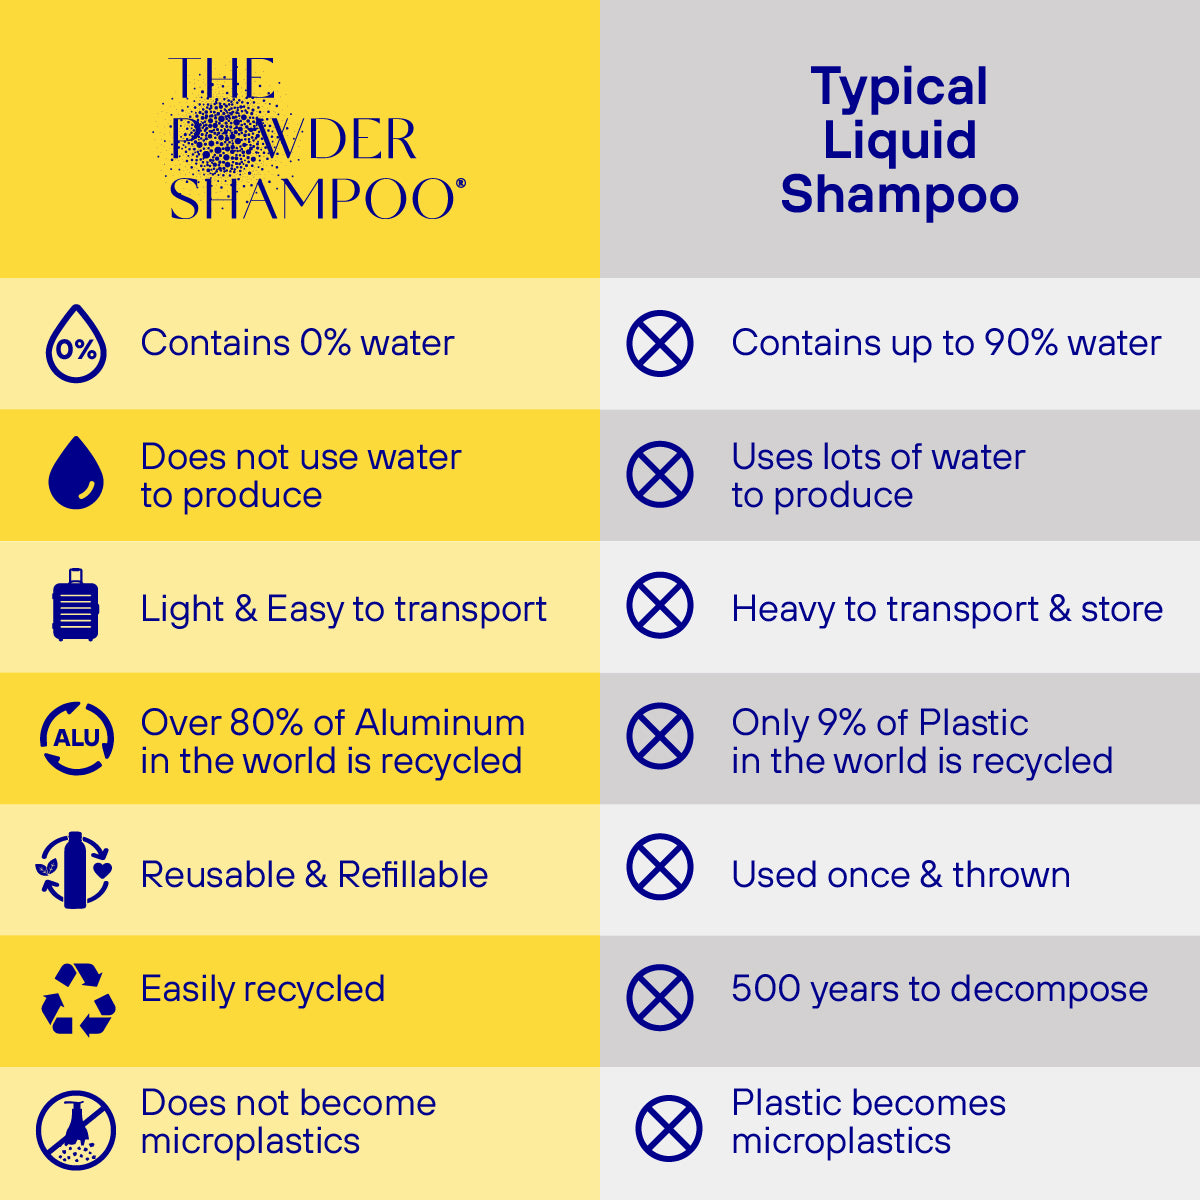 <transcy>Belebendes
& stimulierendes Shampoo für
dünnes & alterndes Haar</transcy>